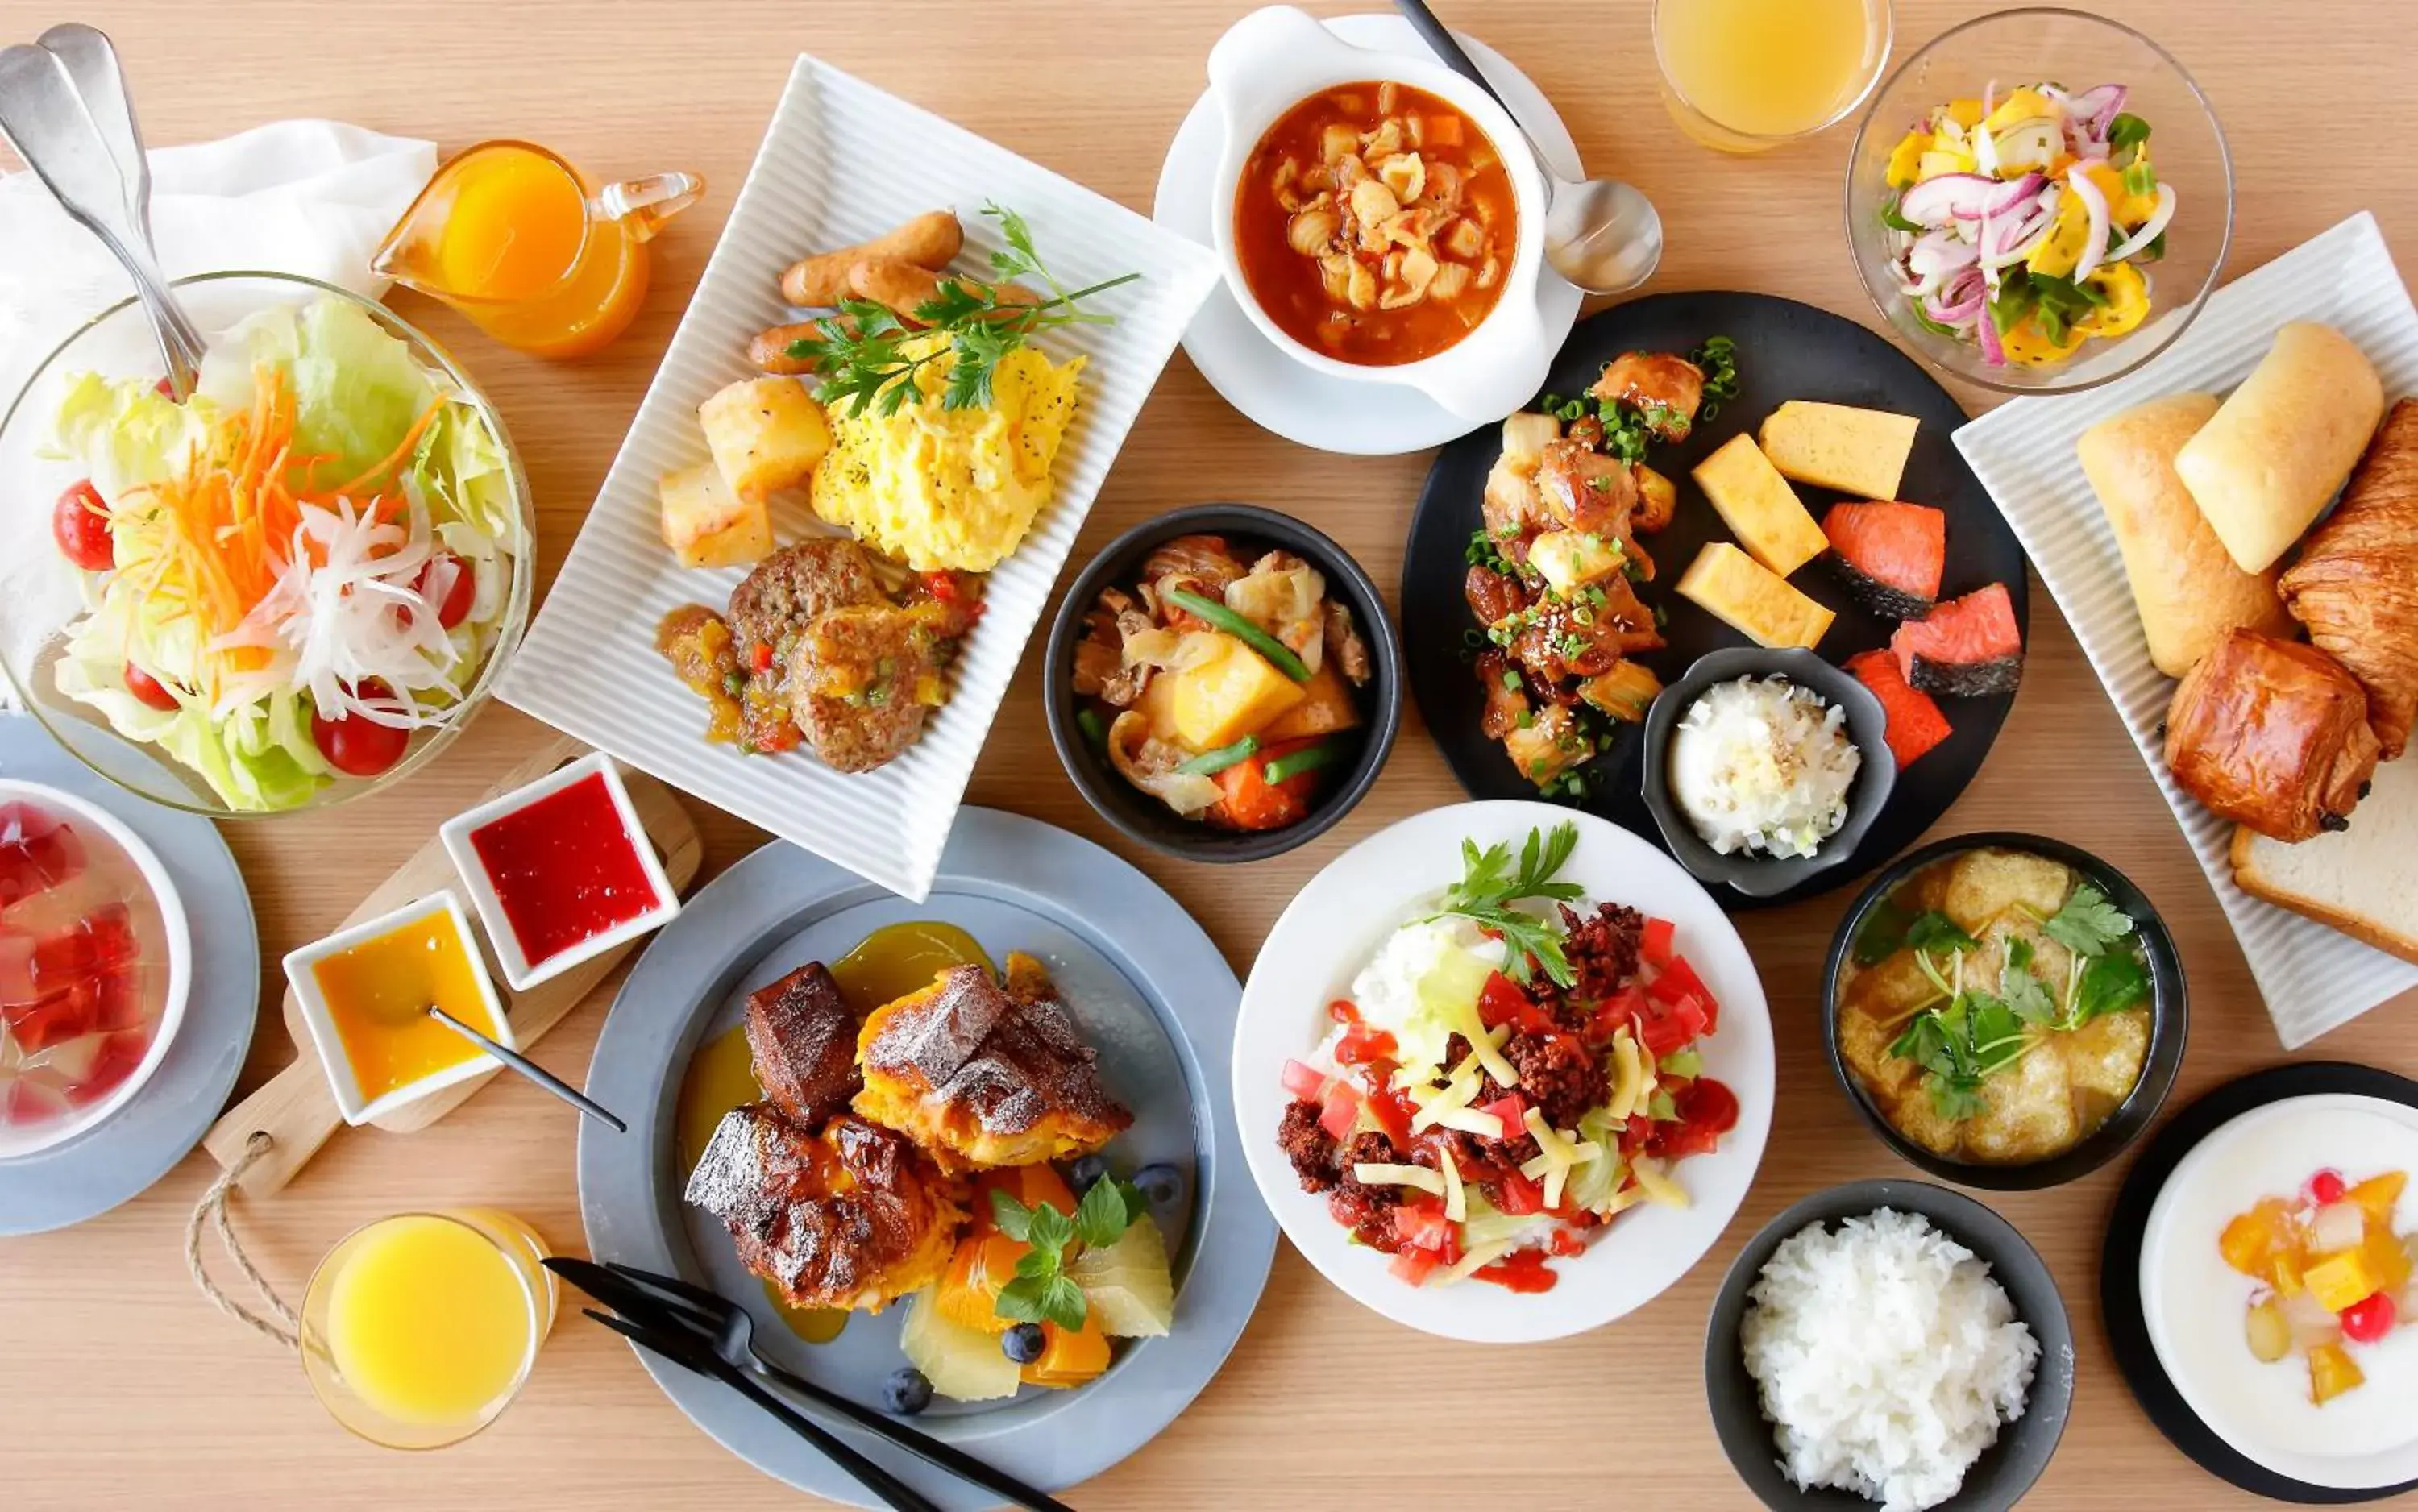 Buffet breakfast, Lunch and Dinner in The Singulari Hotel & Skyspa at Universal Studios Japan